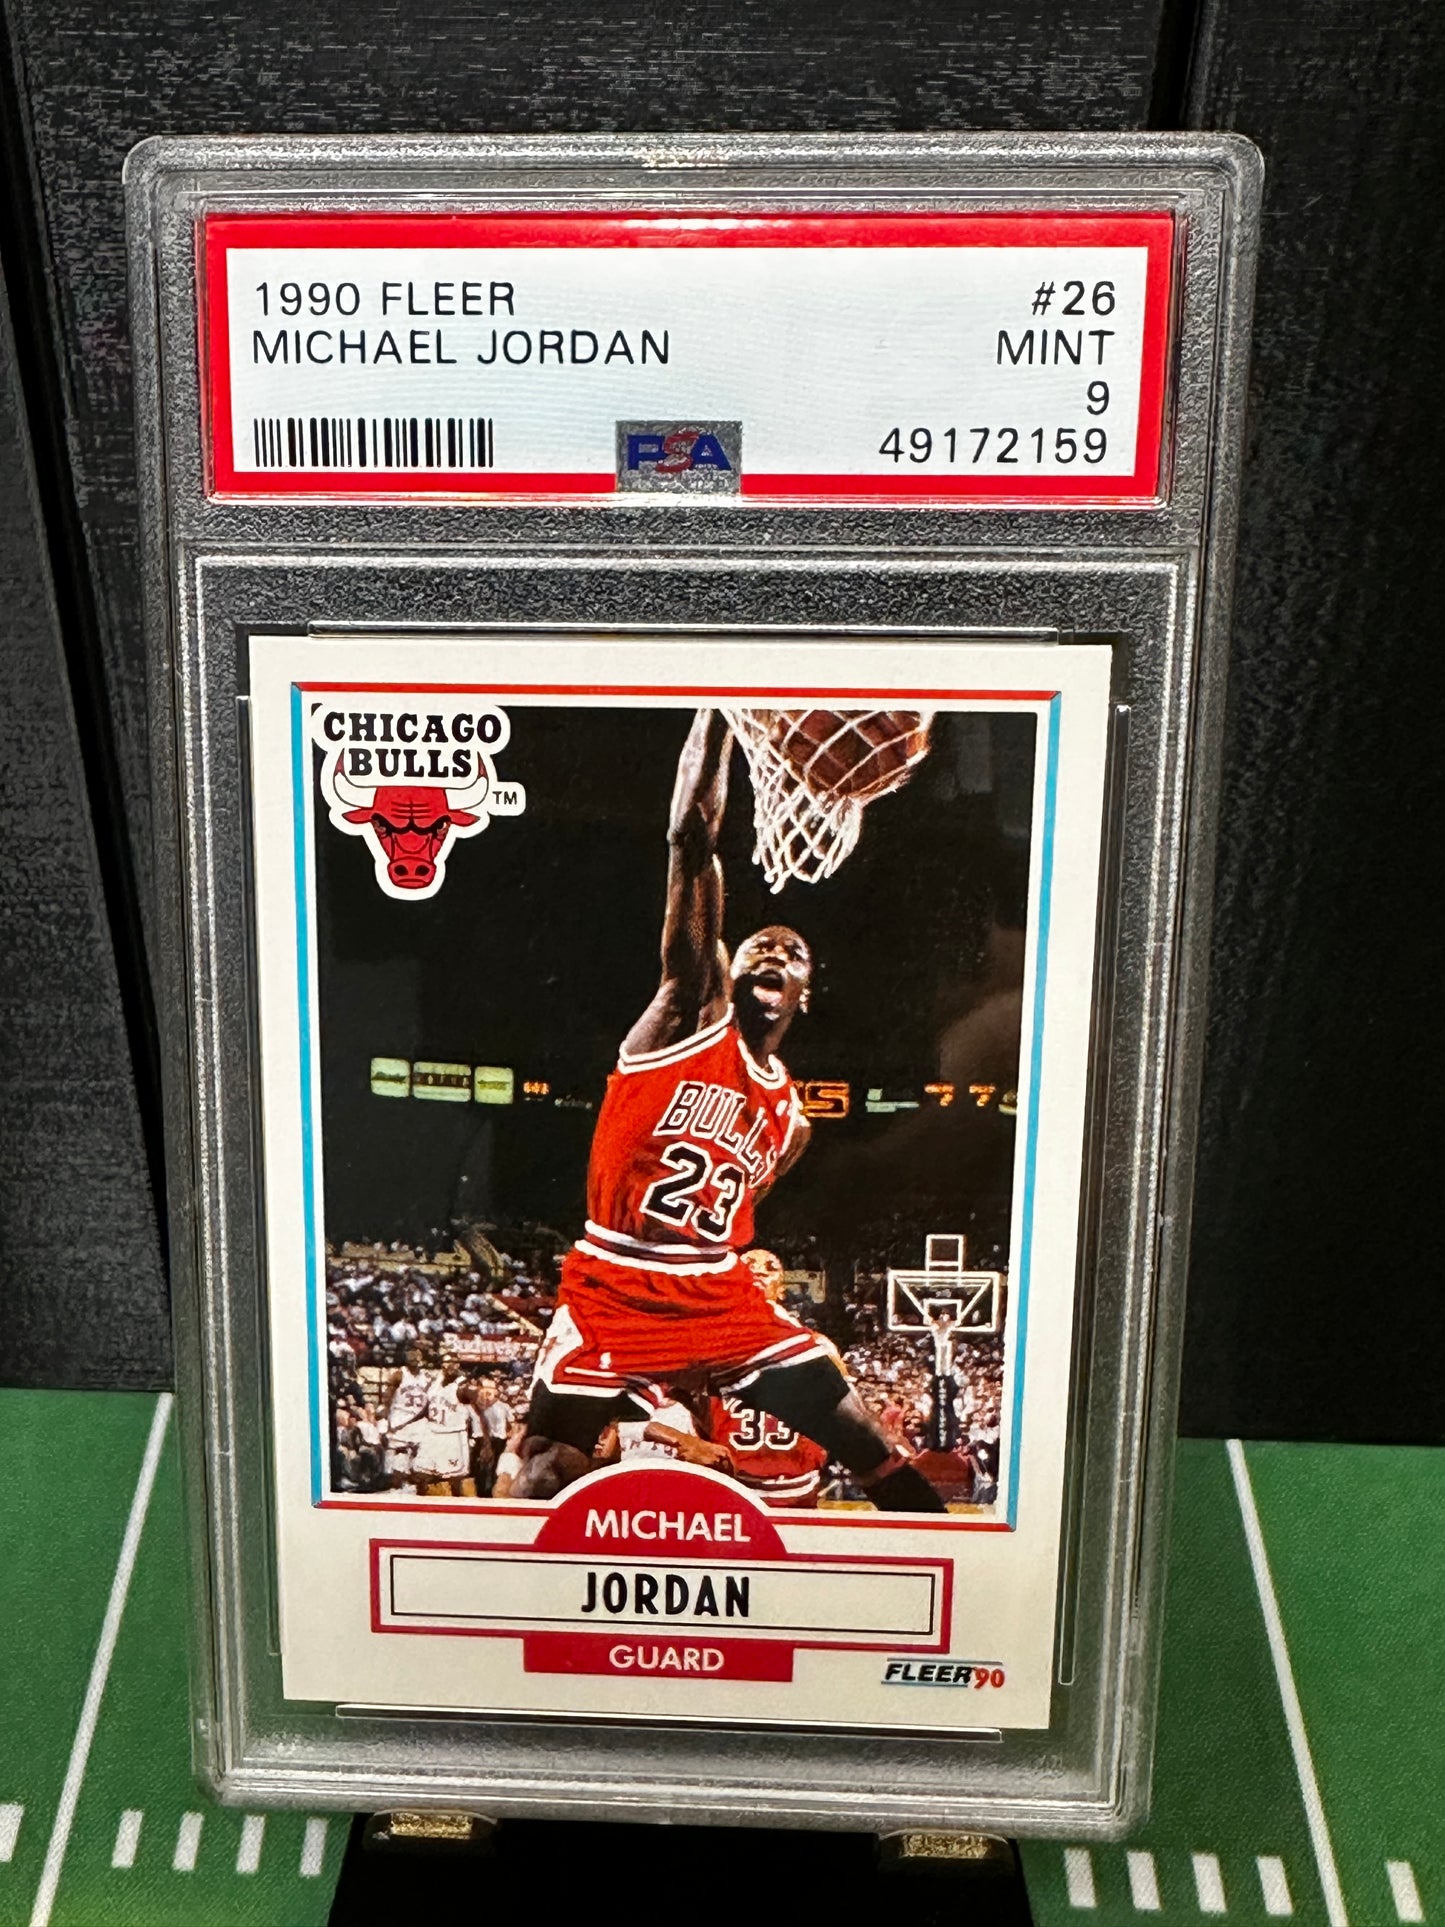 1990 Fleer Michael Jordan PSA 9 MINT Card #26 Chicago Bulls HOF